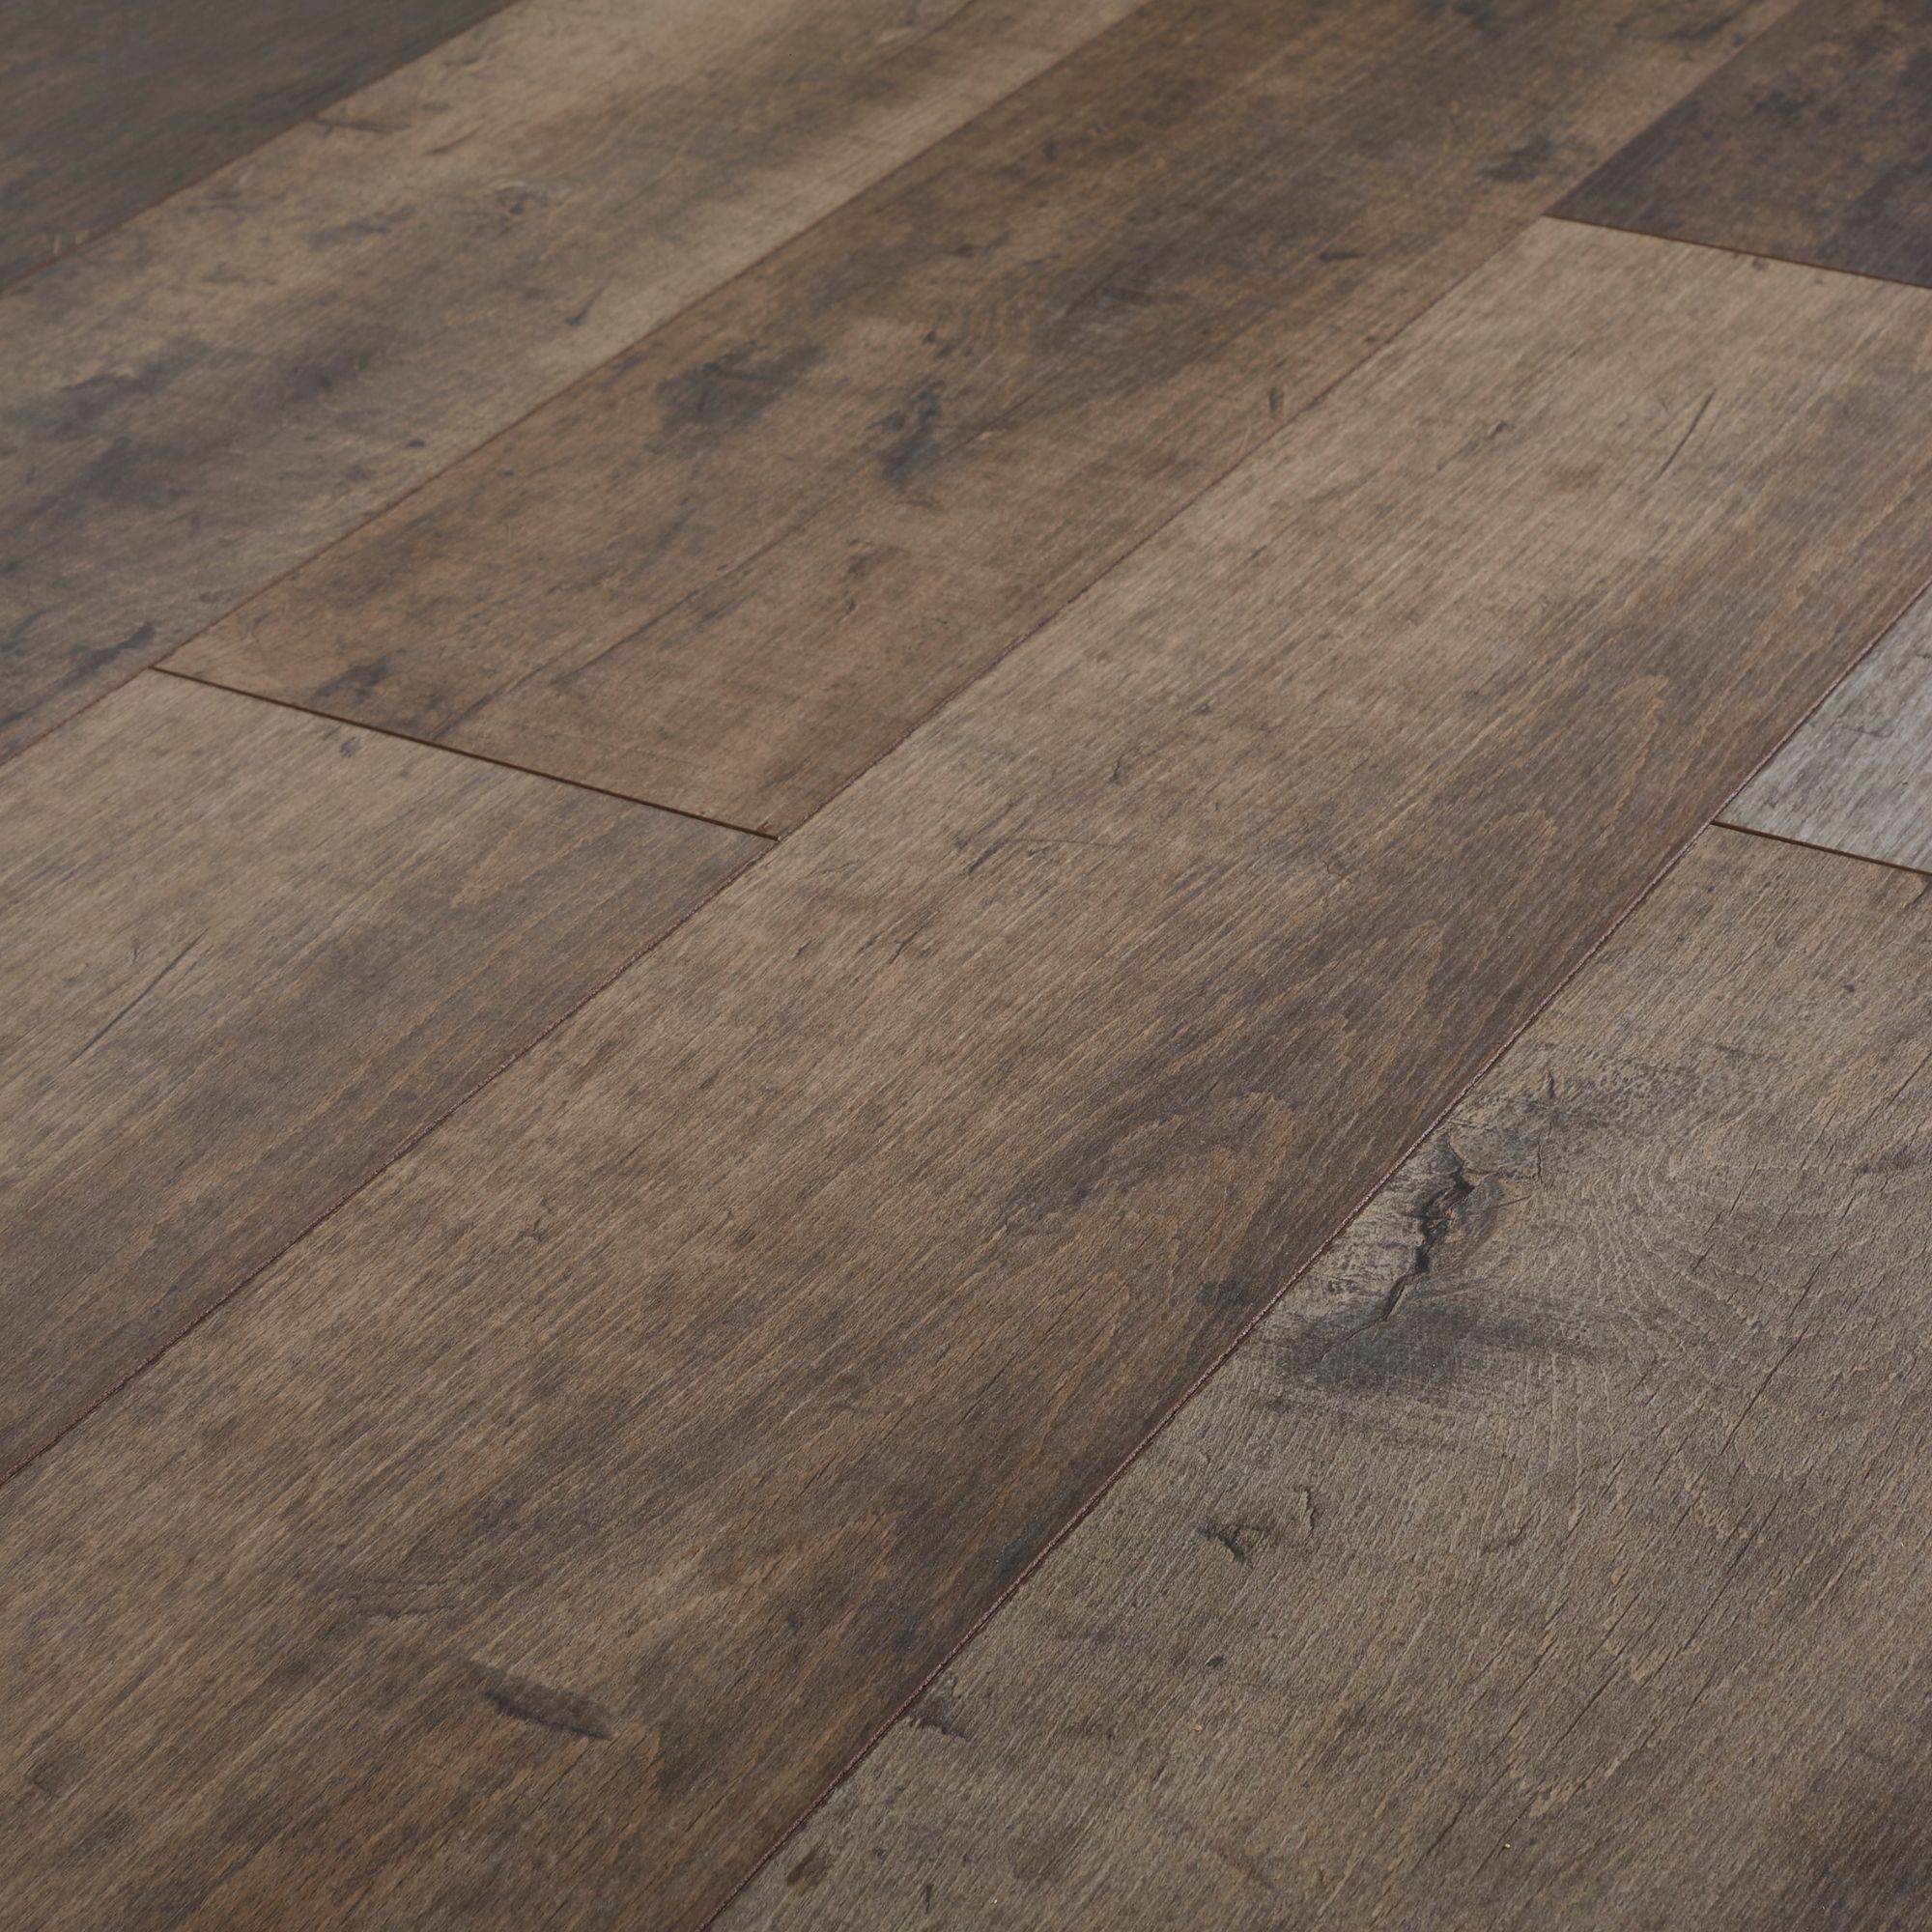 14 New Wooden floor glue bq for Ideas